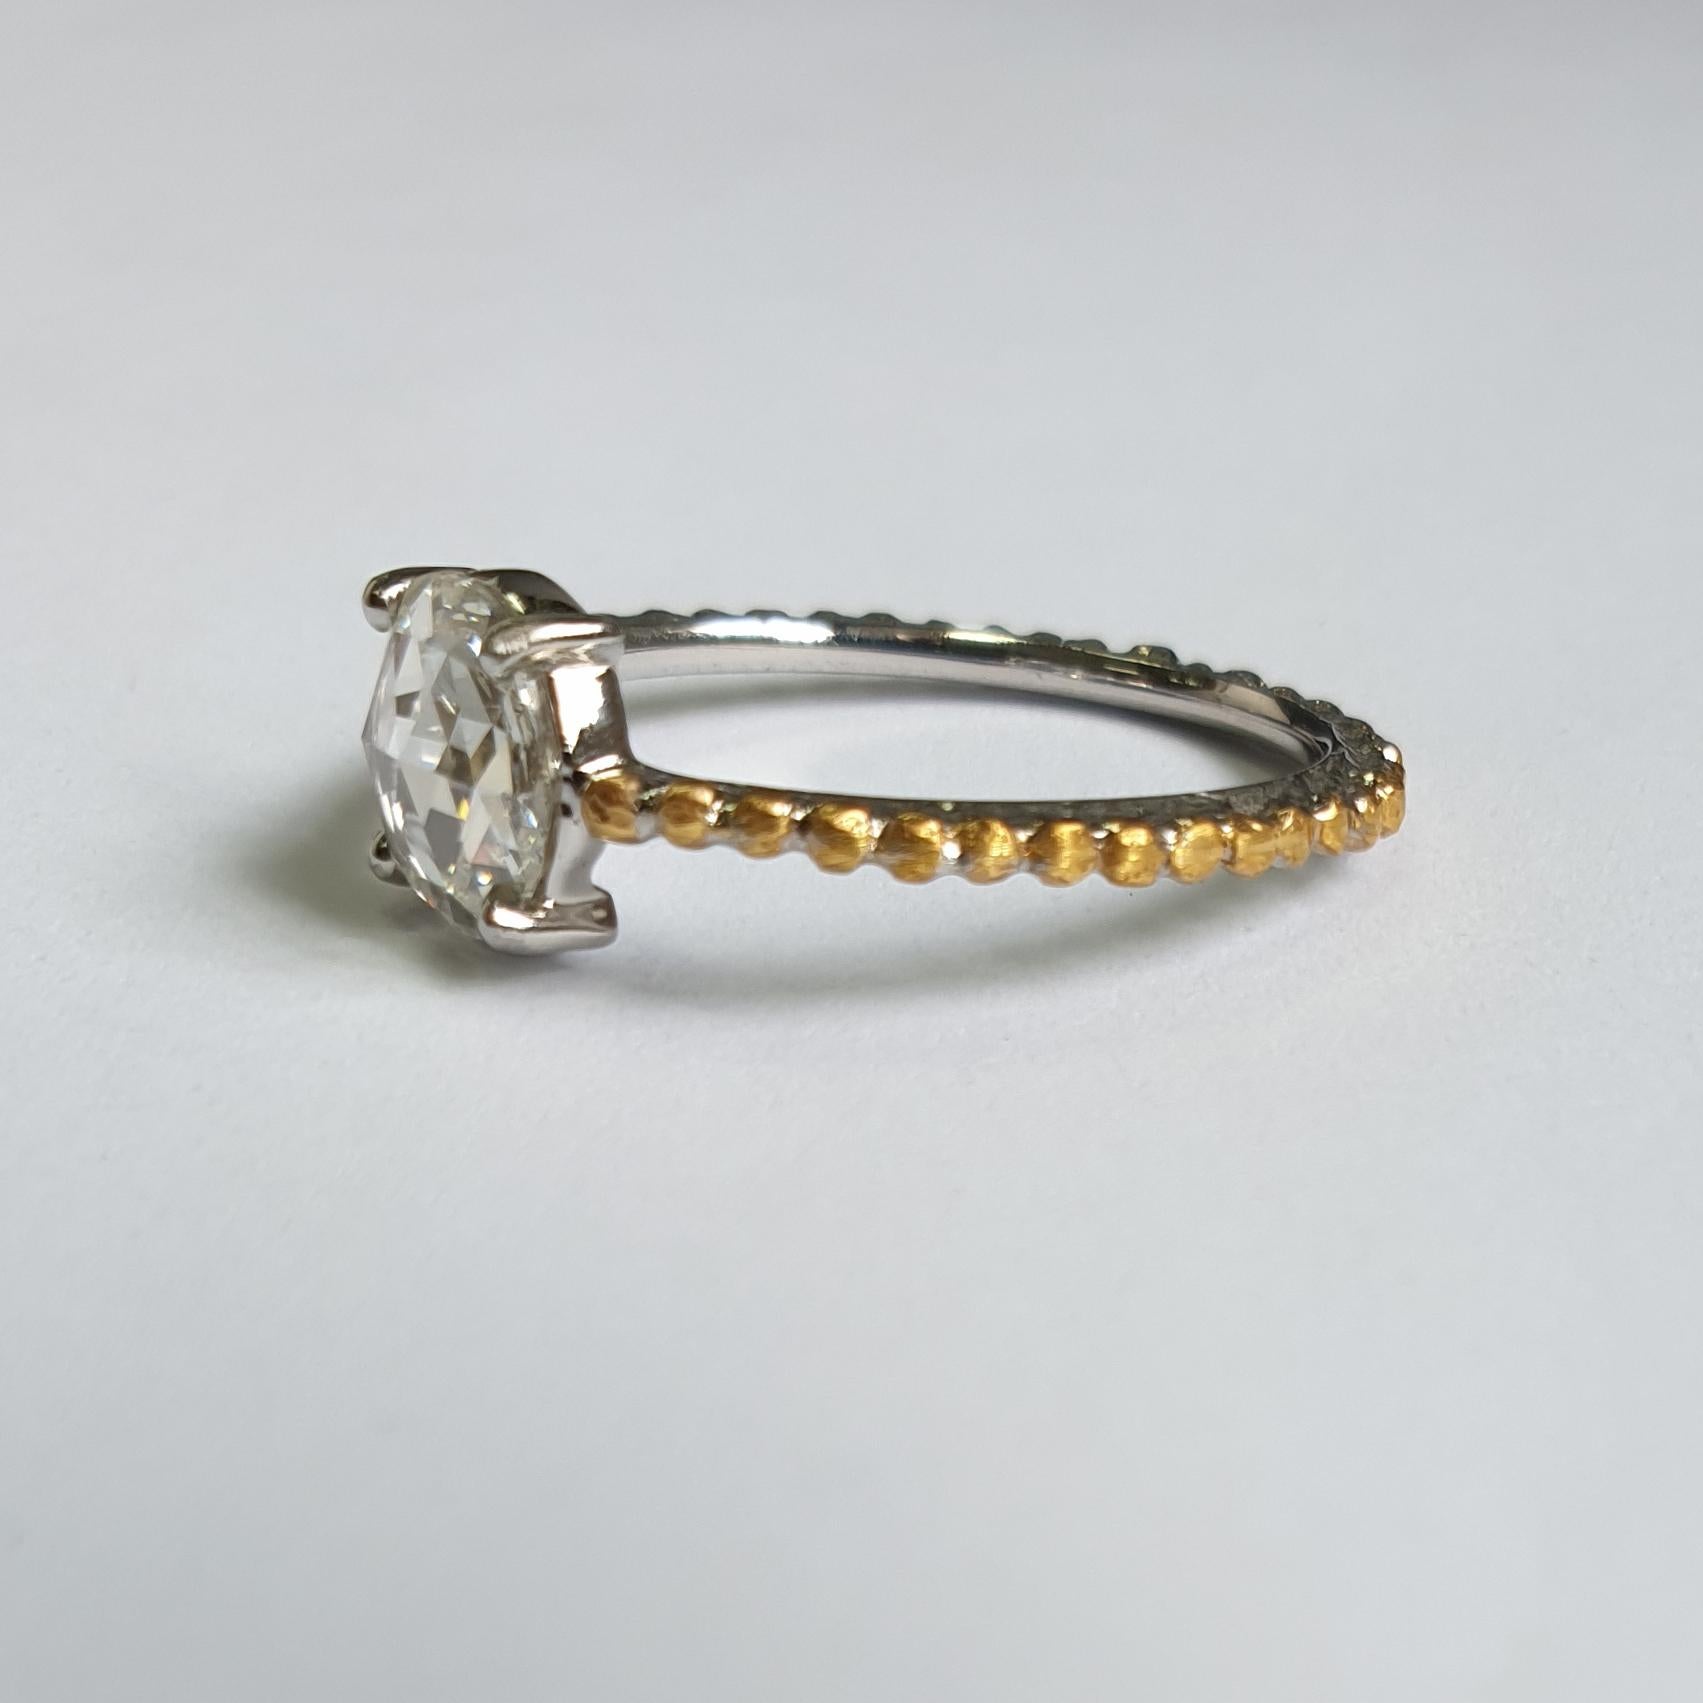 Contemporary 0.72 Carat Rose Cut Diamond Ring in Platinum and 24 Karat Gold